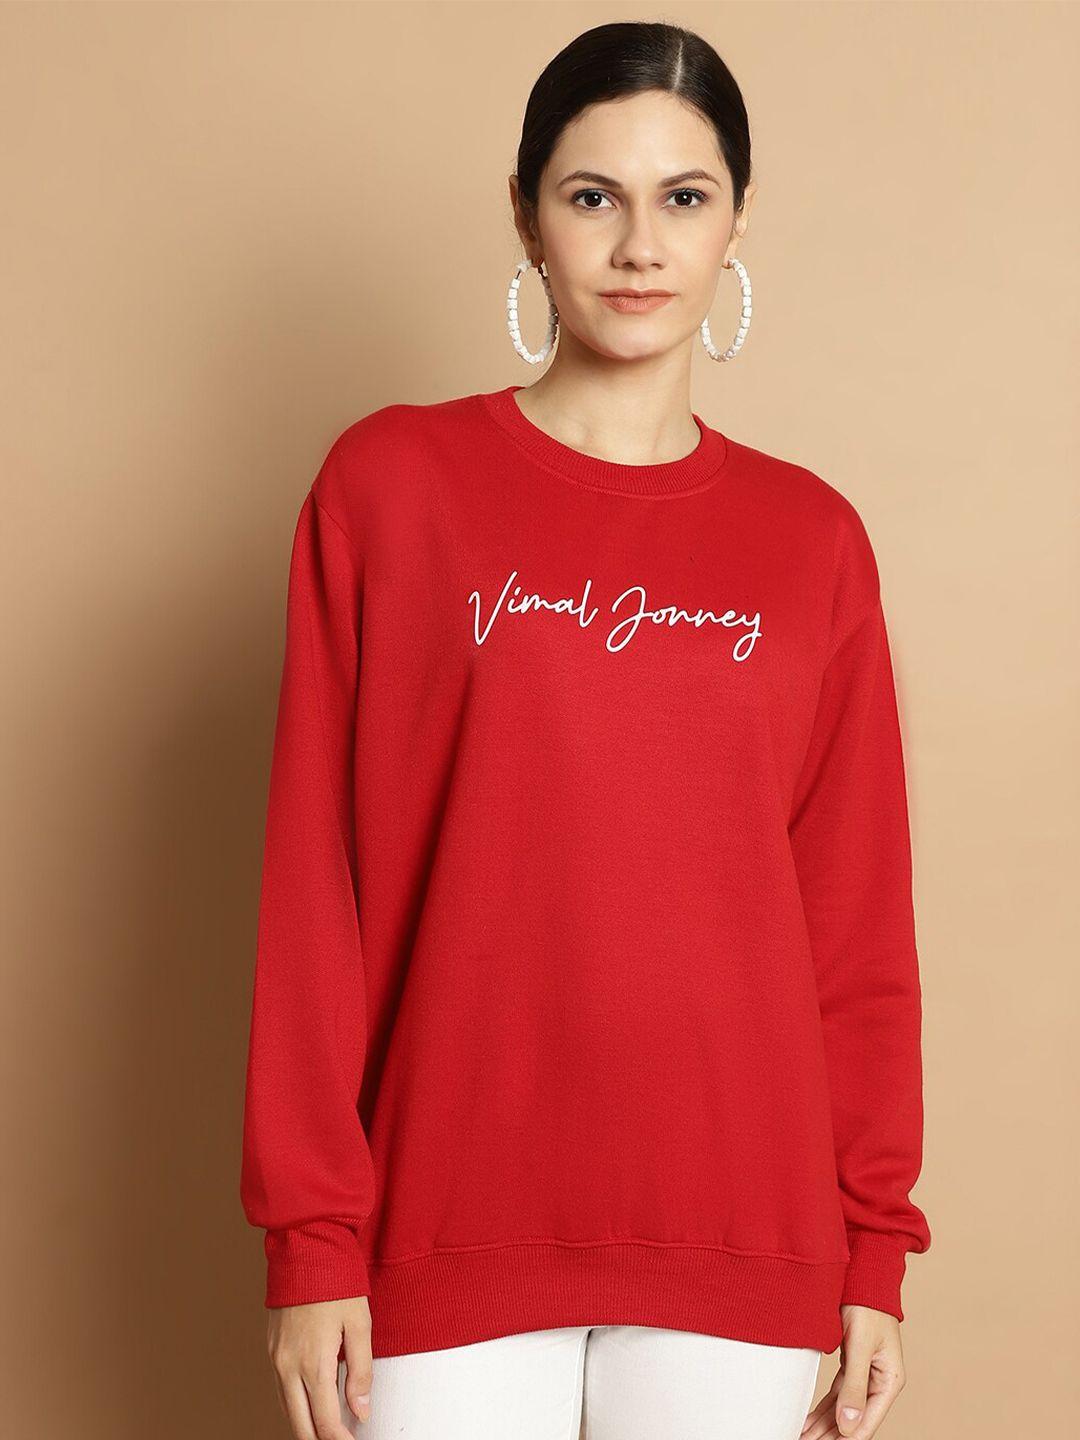 vimal jonney typography printed pullover fleece sweatshirt